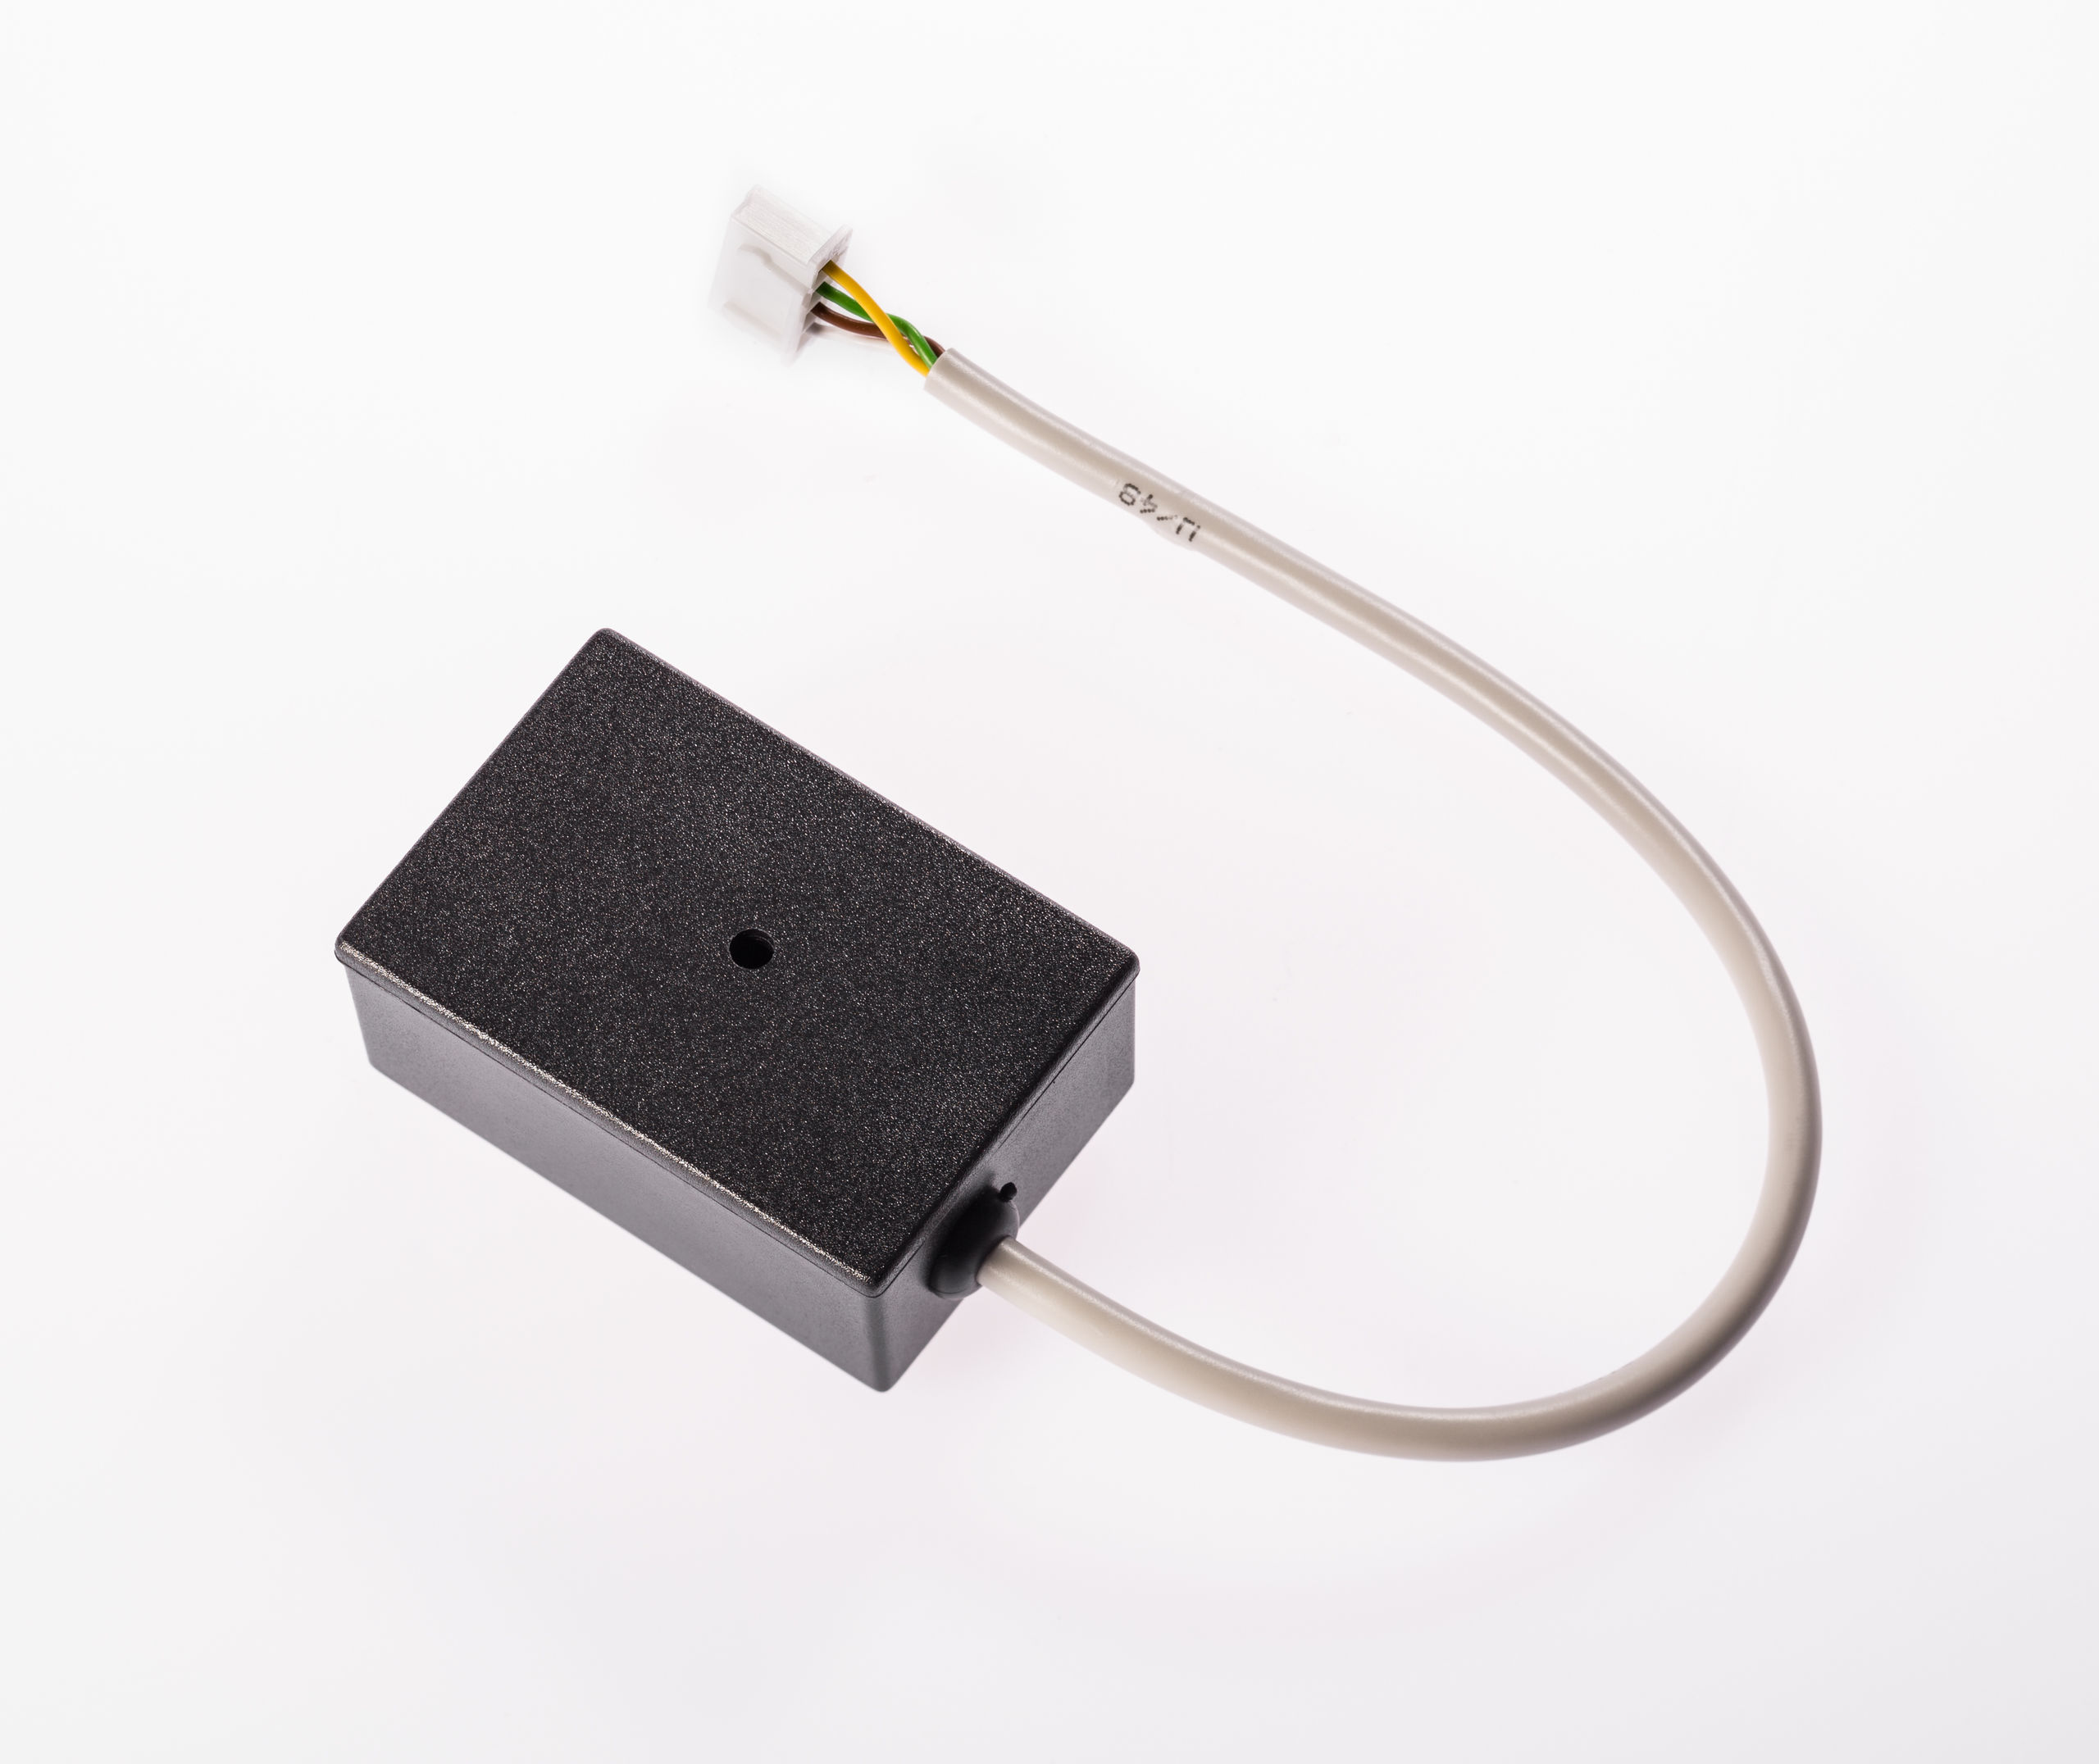 HF sensor for diverse applications